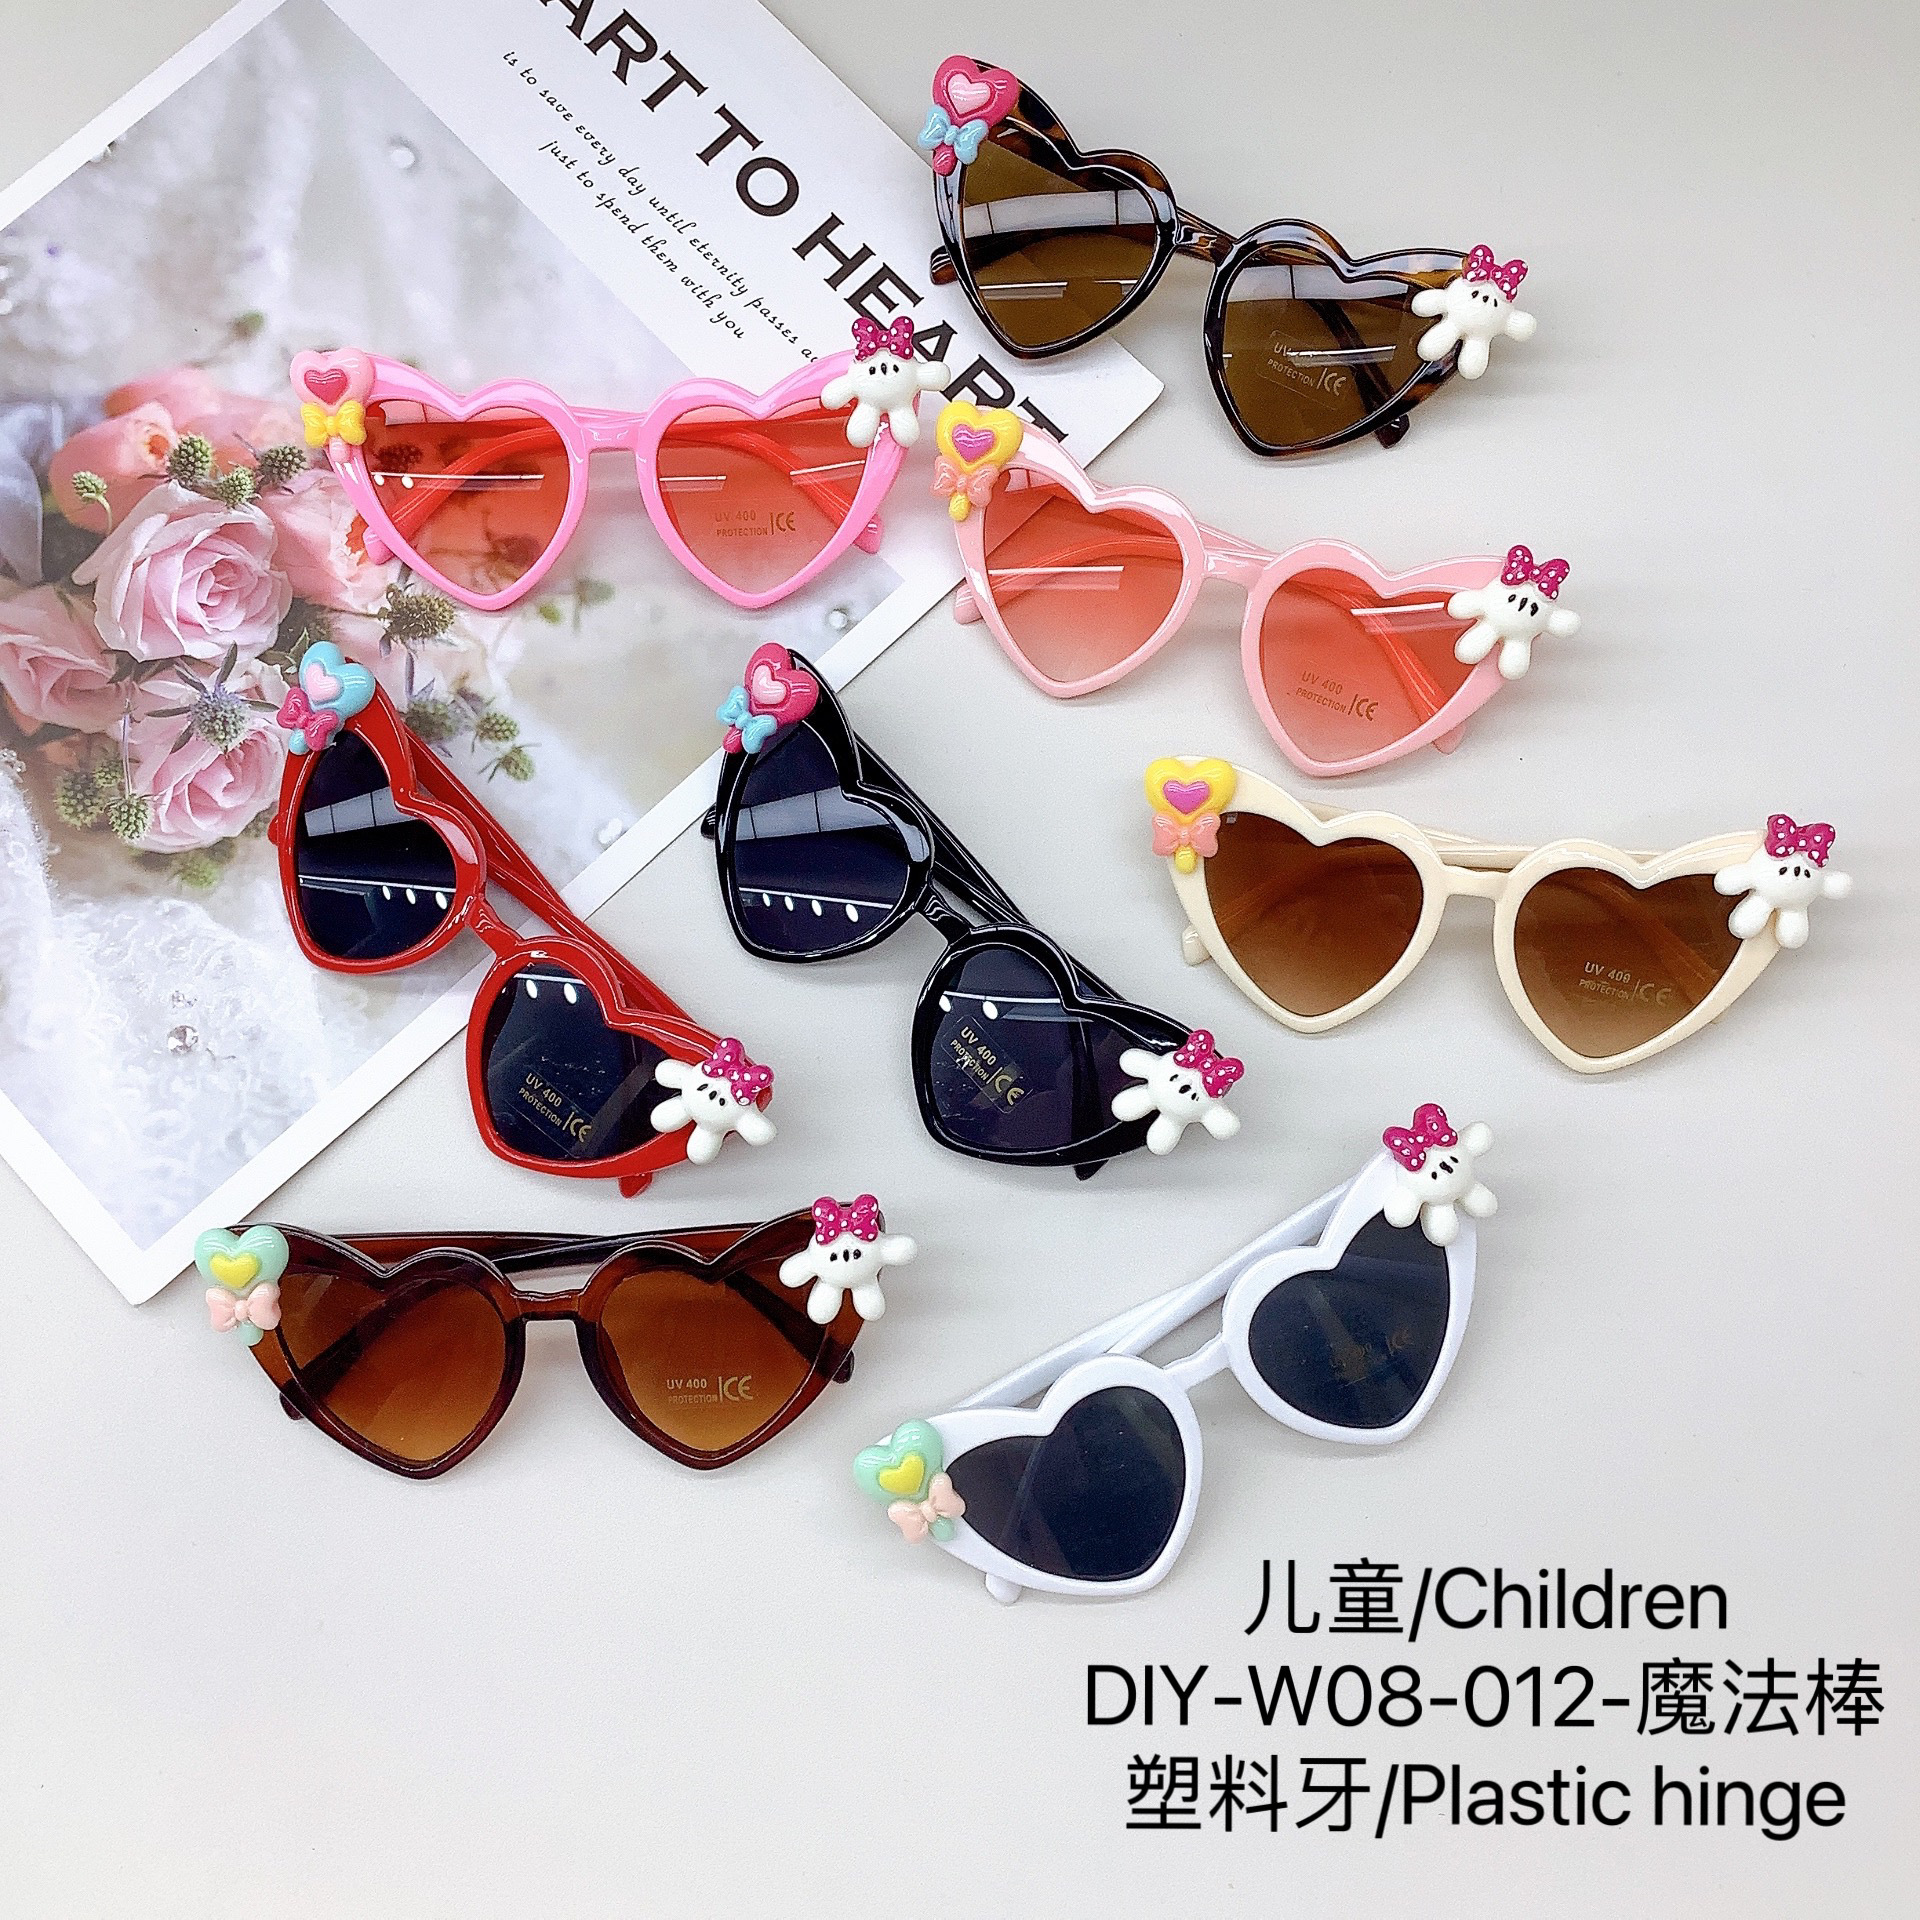 Fashion Kids Sunglasses Cute Cartoon Magic Wand Girls Sunglasses Party Gathering Sun Protection UV Protection Boy